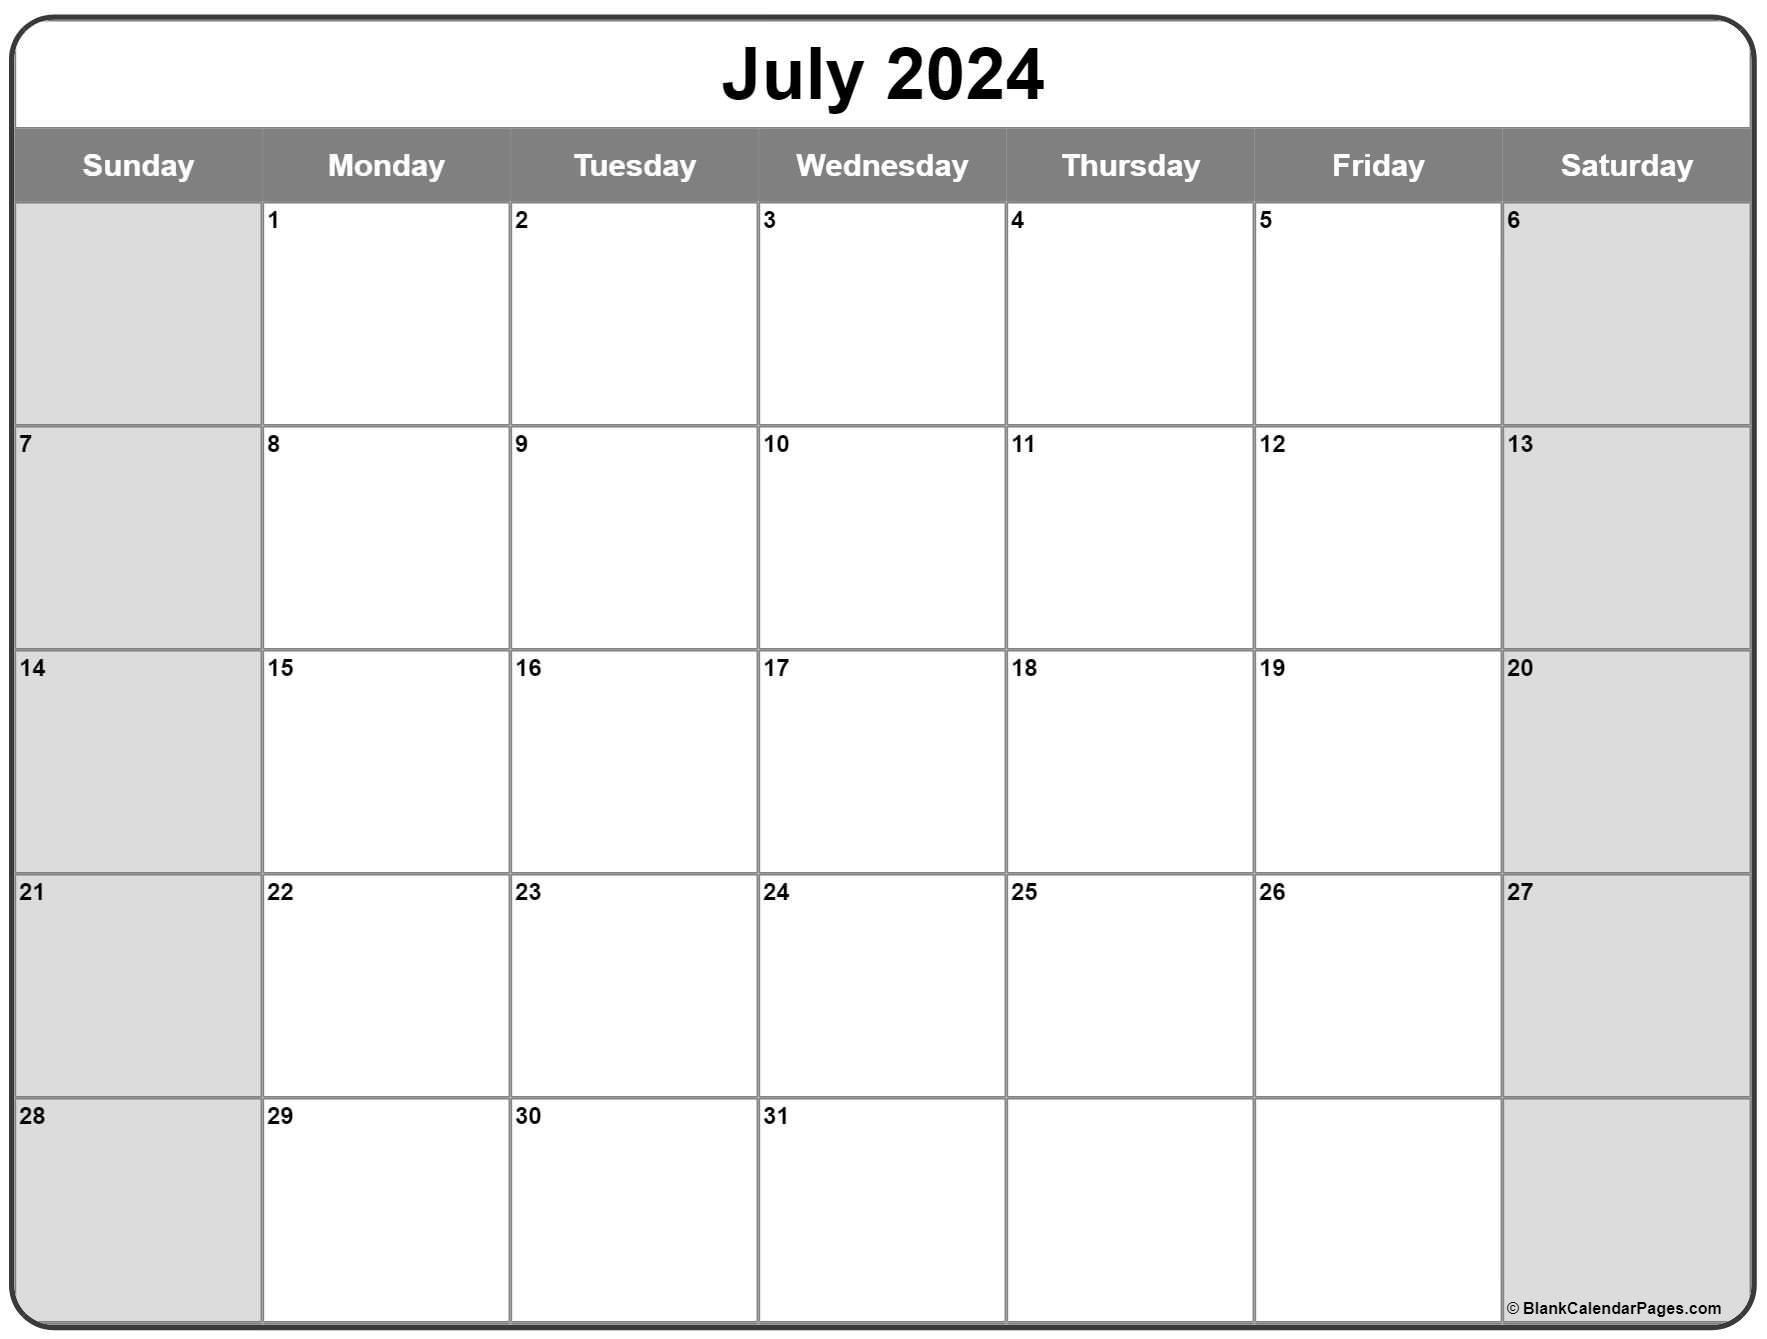 Saturday 15th July 2023 Blank Printable Calendar PELAJARAN